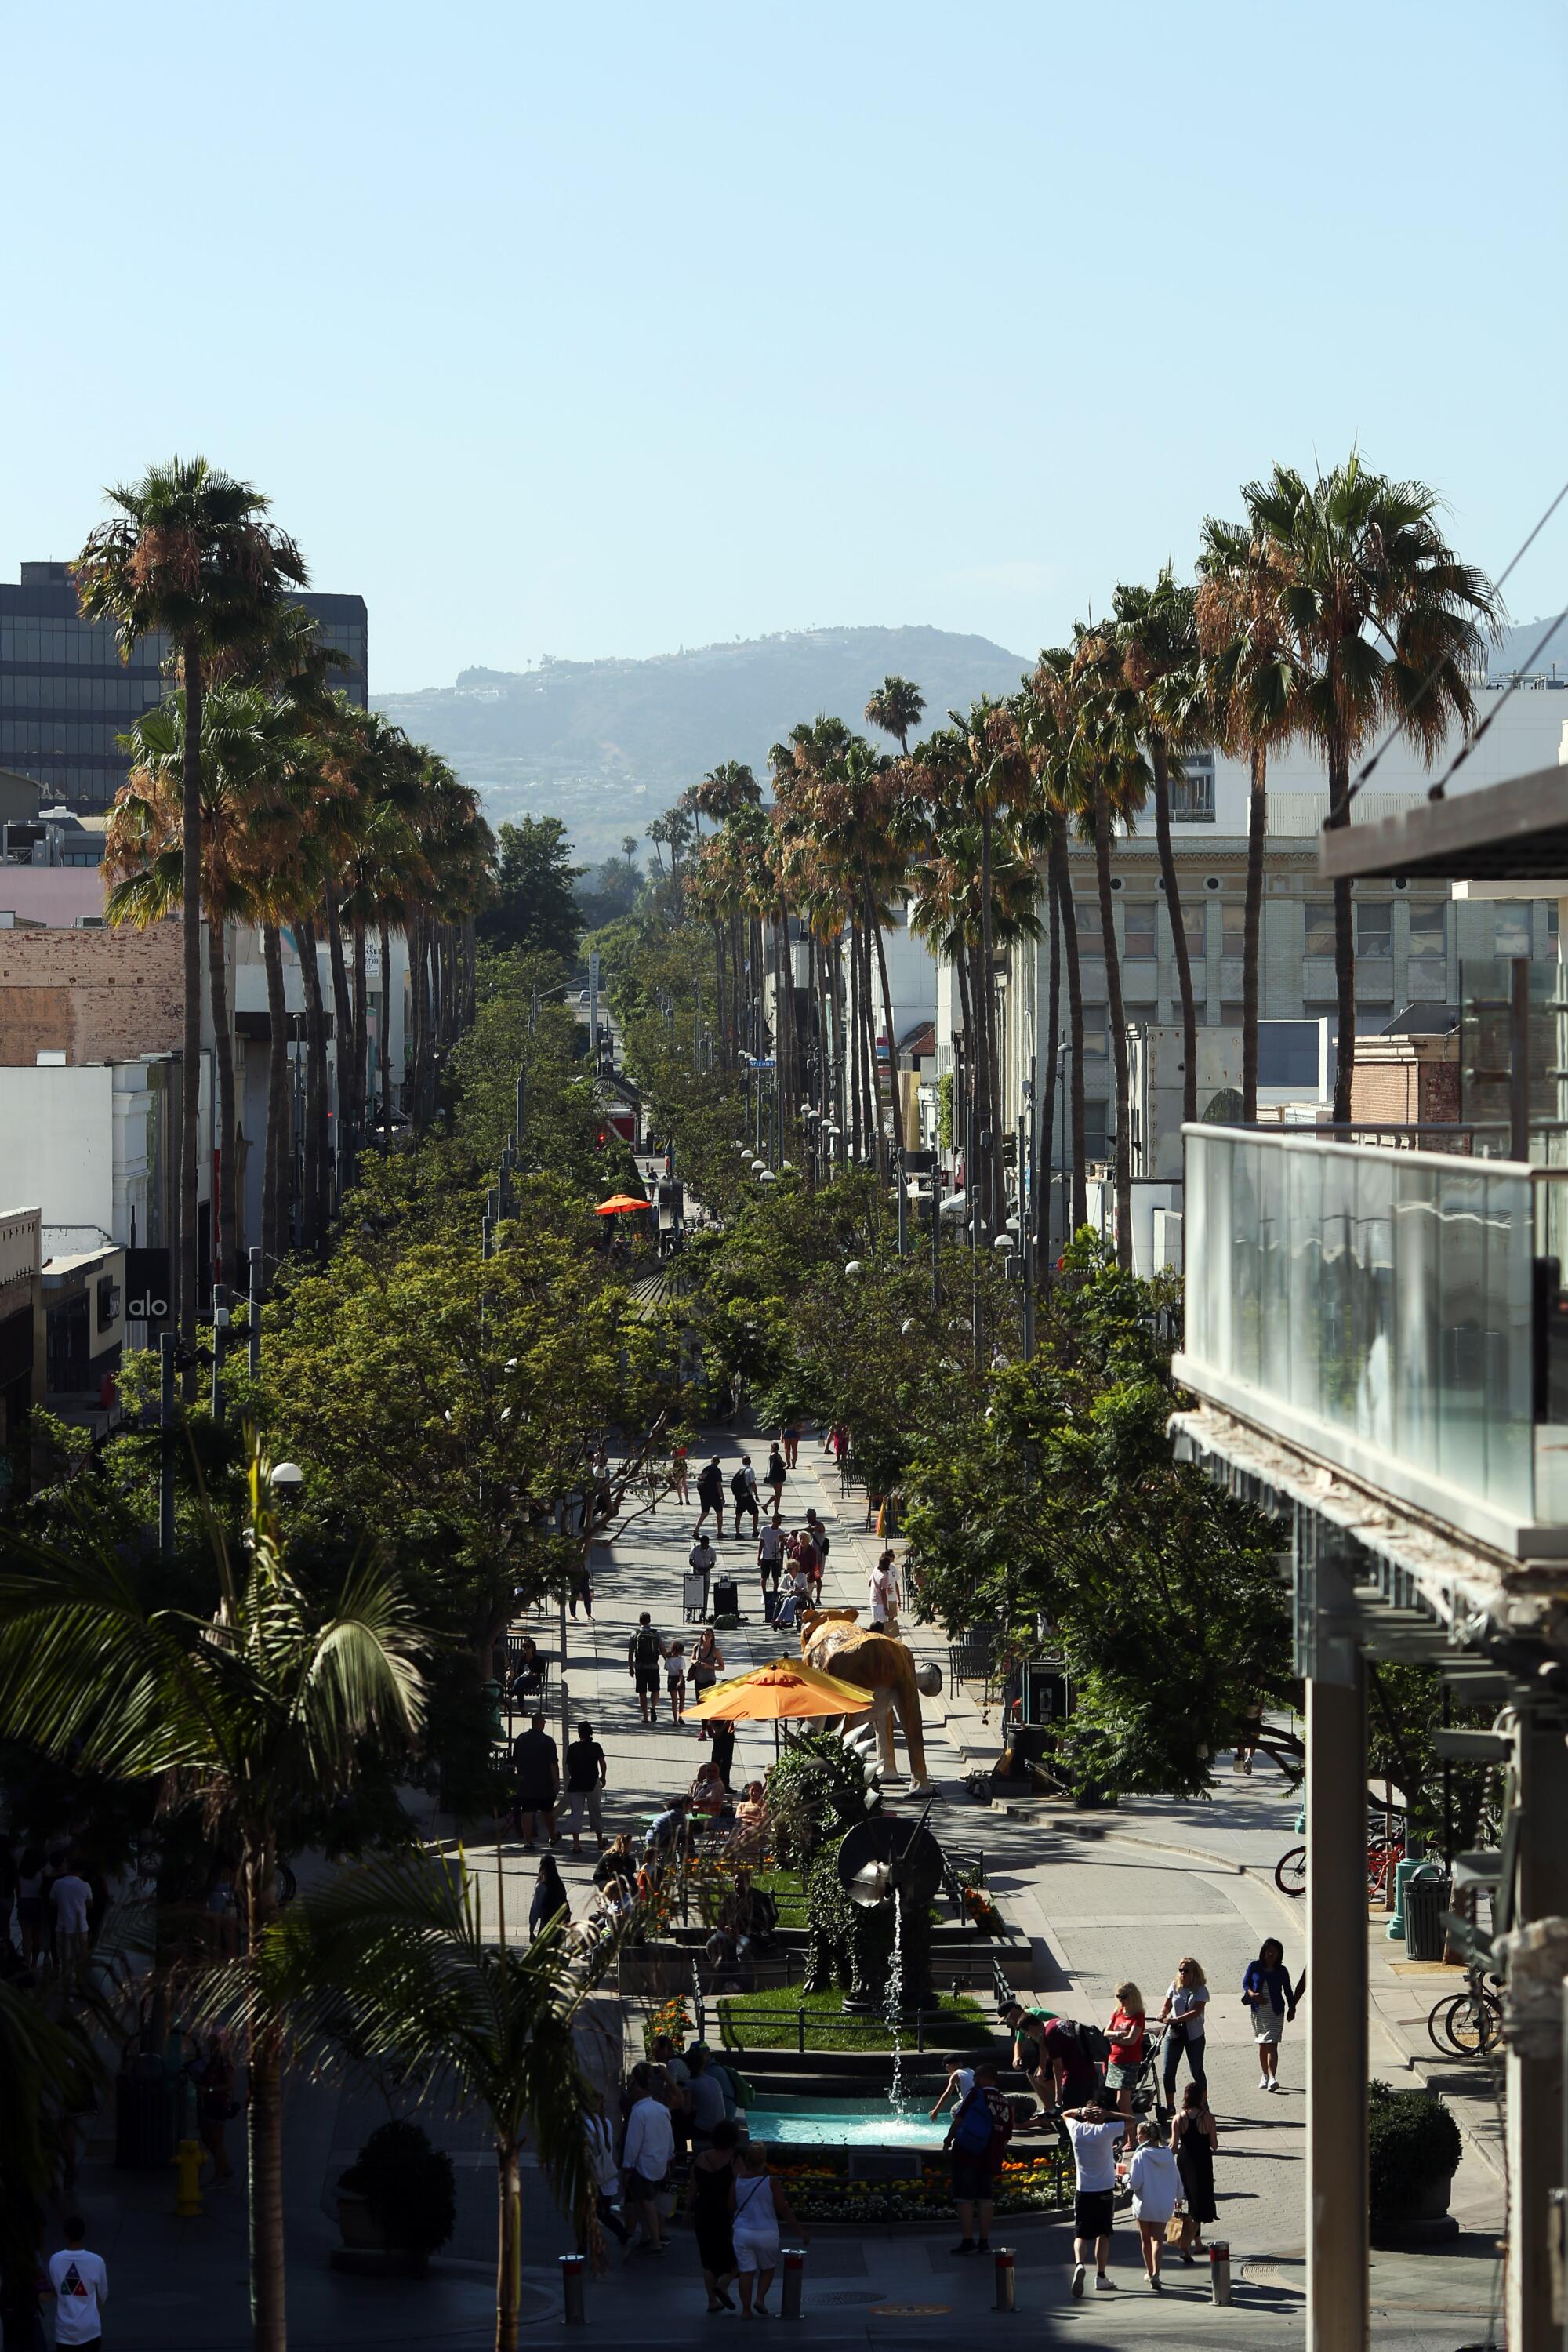 Palm trees line the Third Street Promenade in Santa Monica